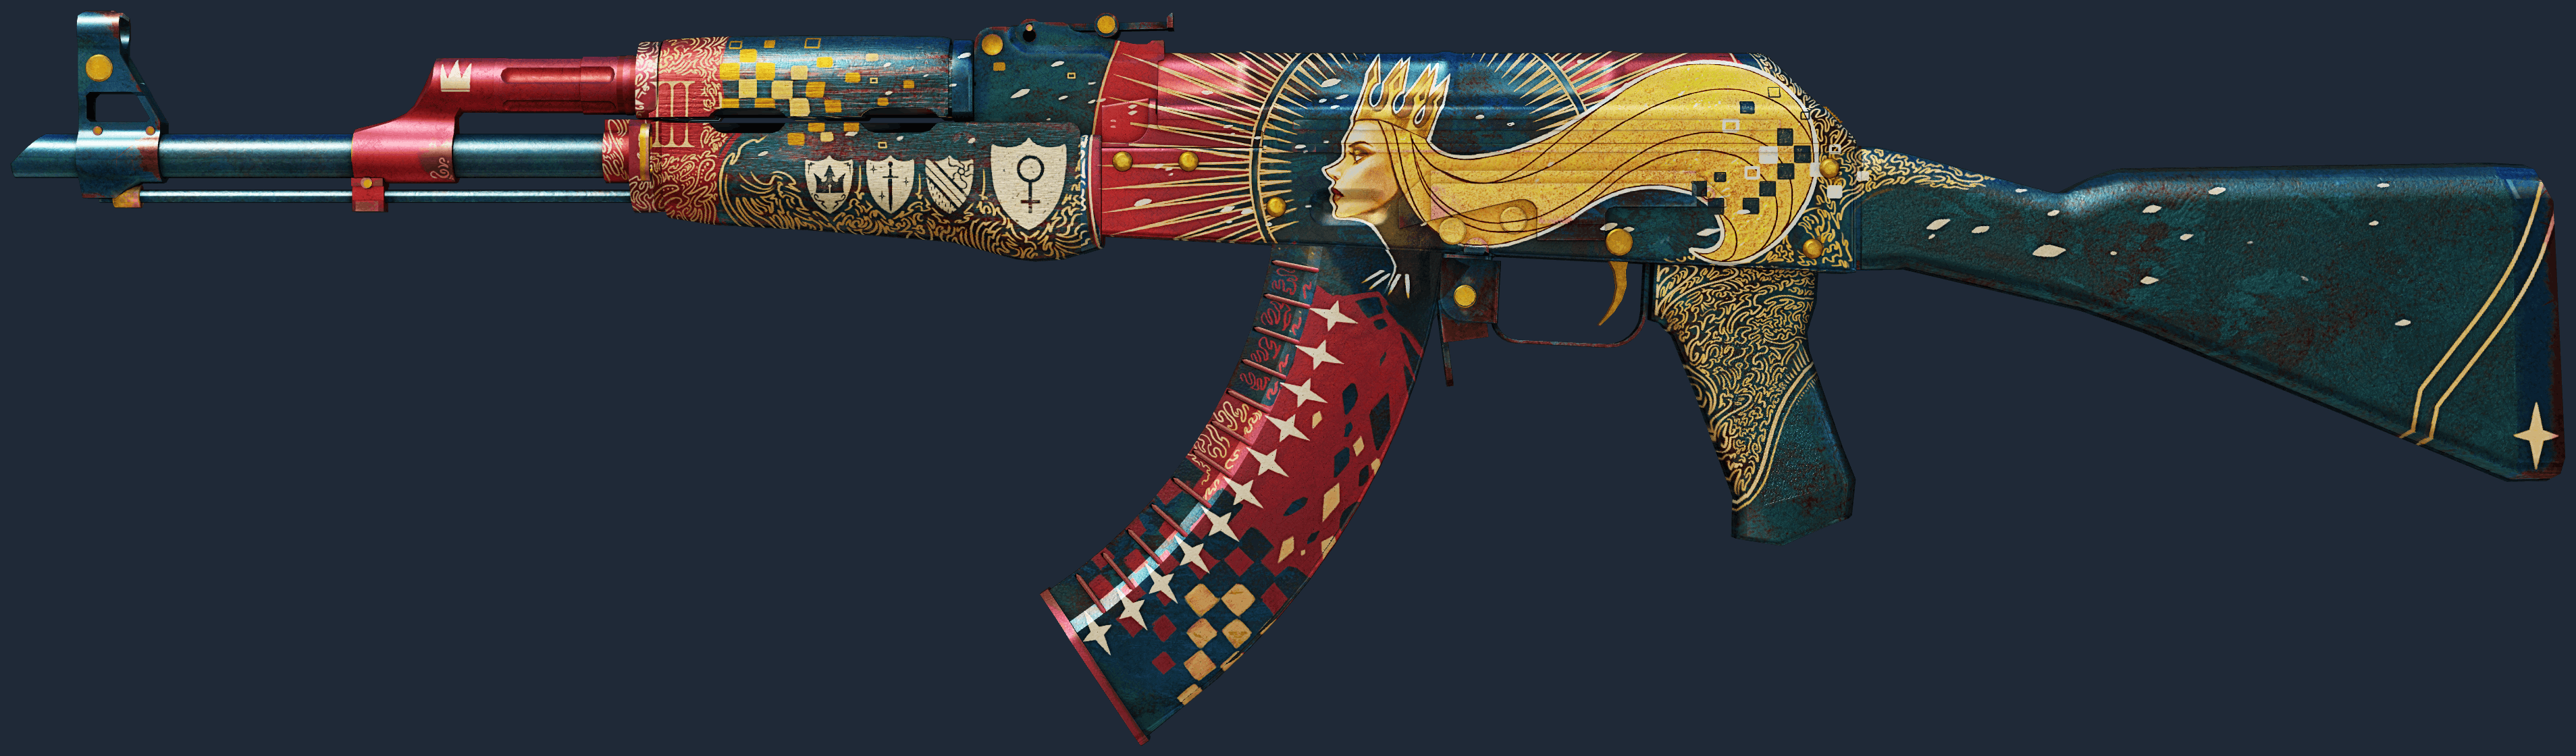 AK-47 | The Empress Screenshot